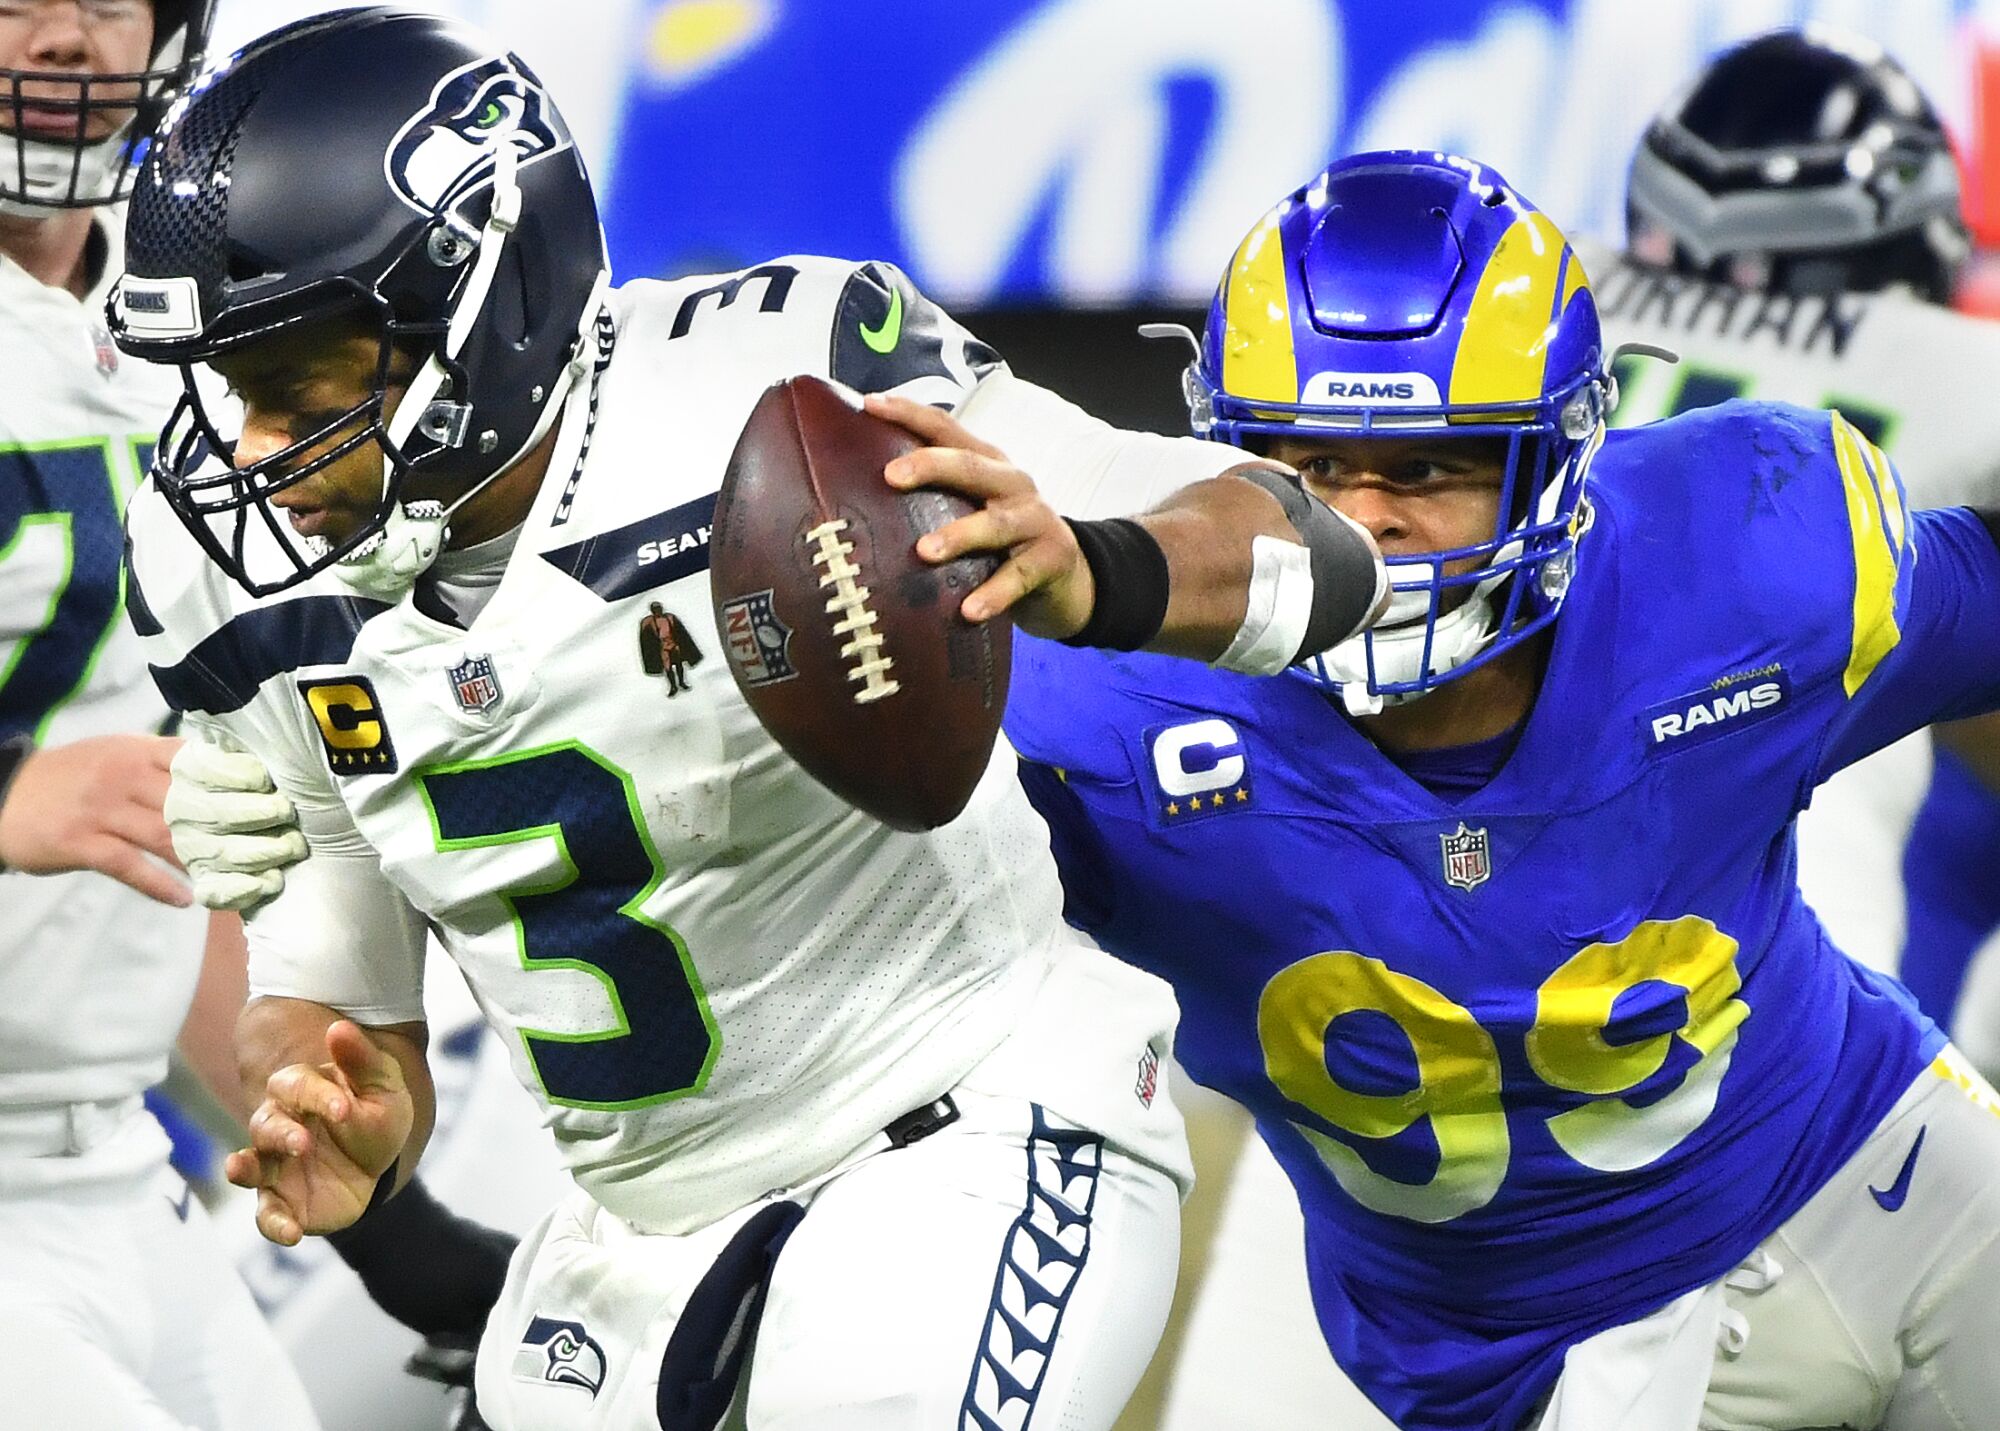 Rams defensive end Aaron Donald sacks Seahawks quarterback Russell Wilson.